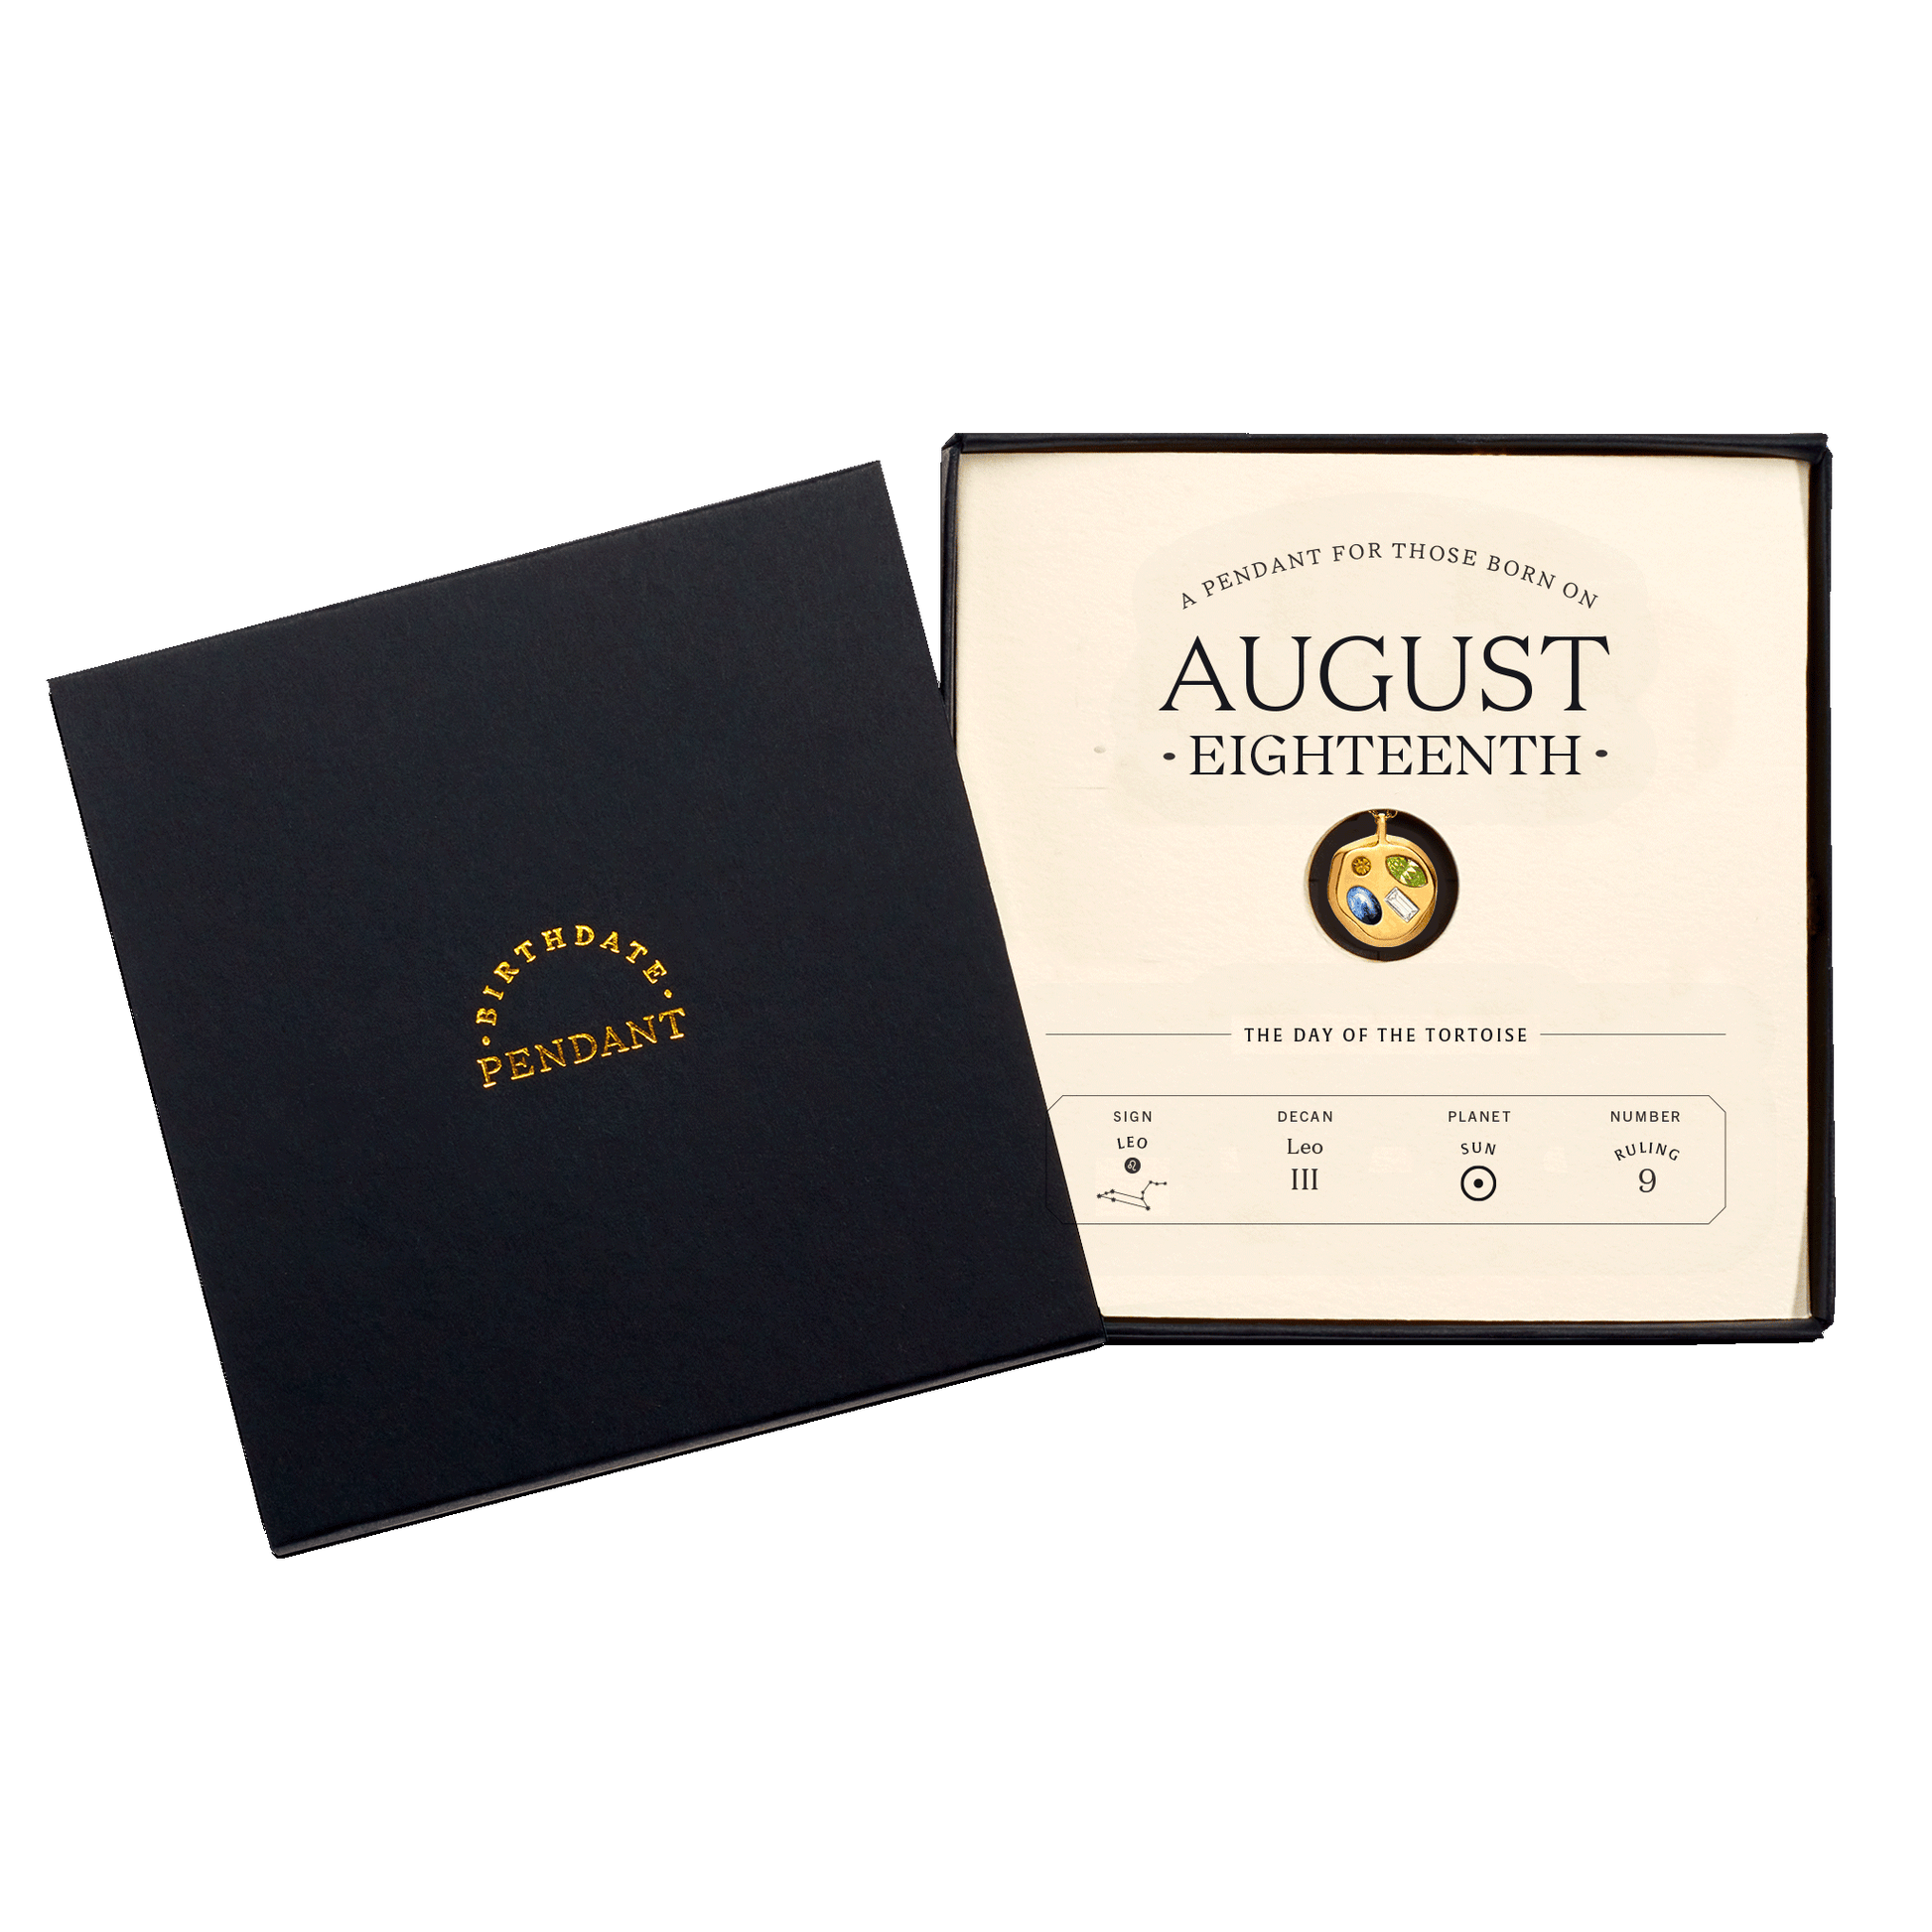 The August Eighteenth Pendant inside its box